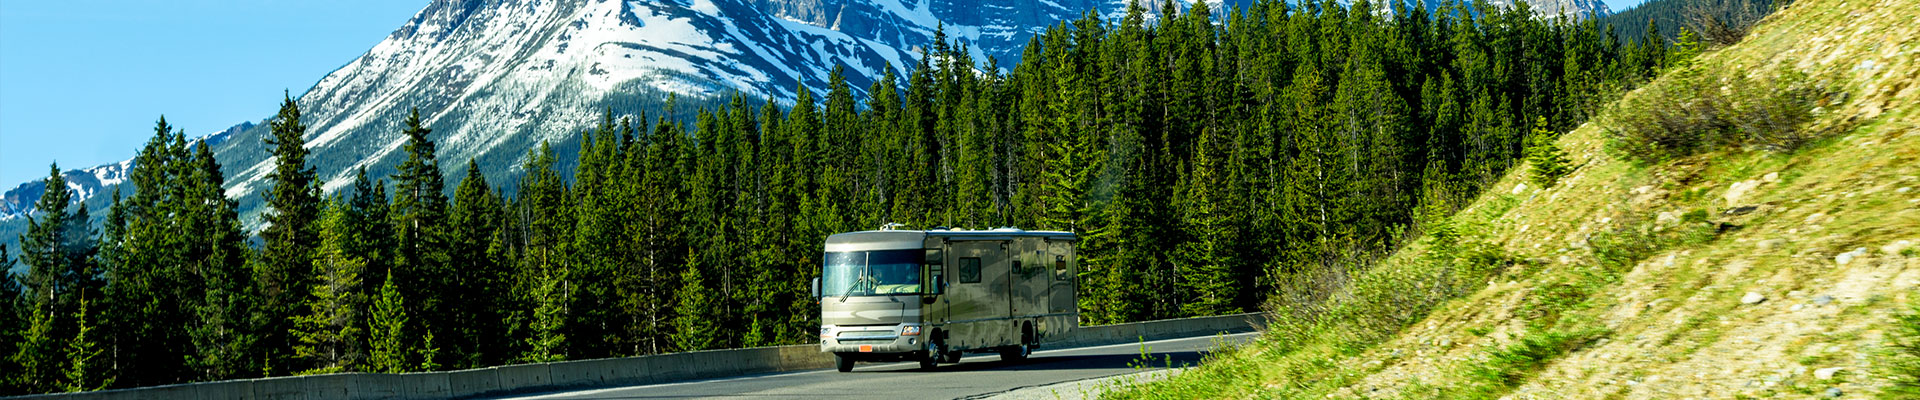 fantasy rv caravan tours